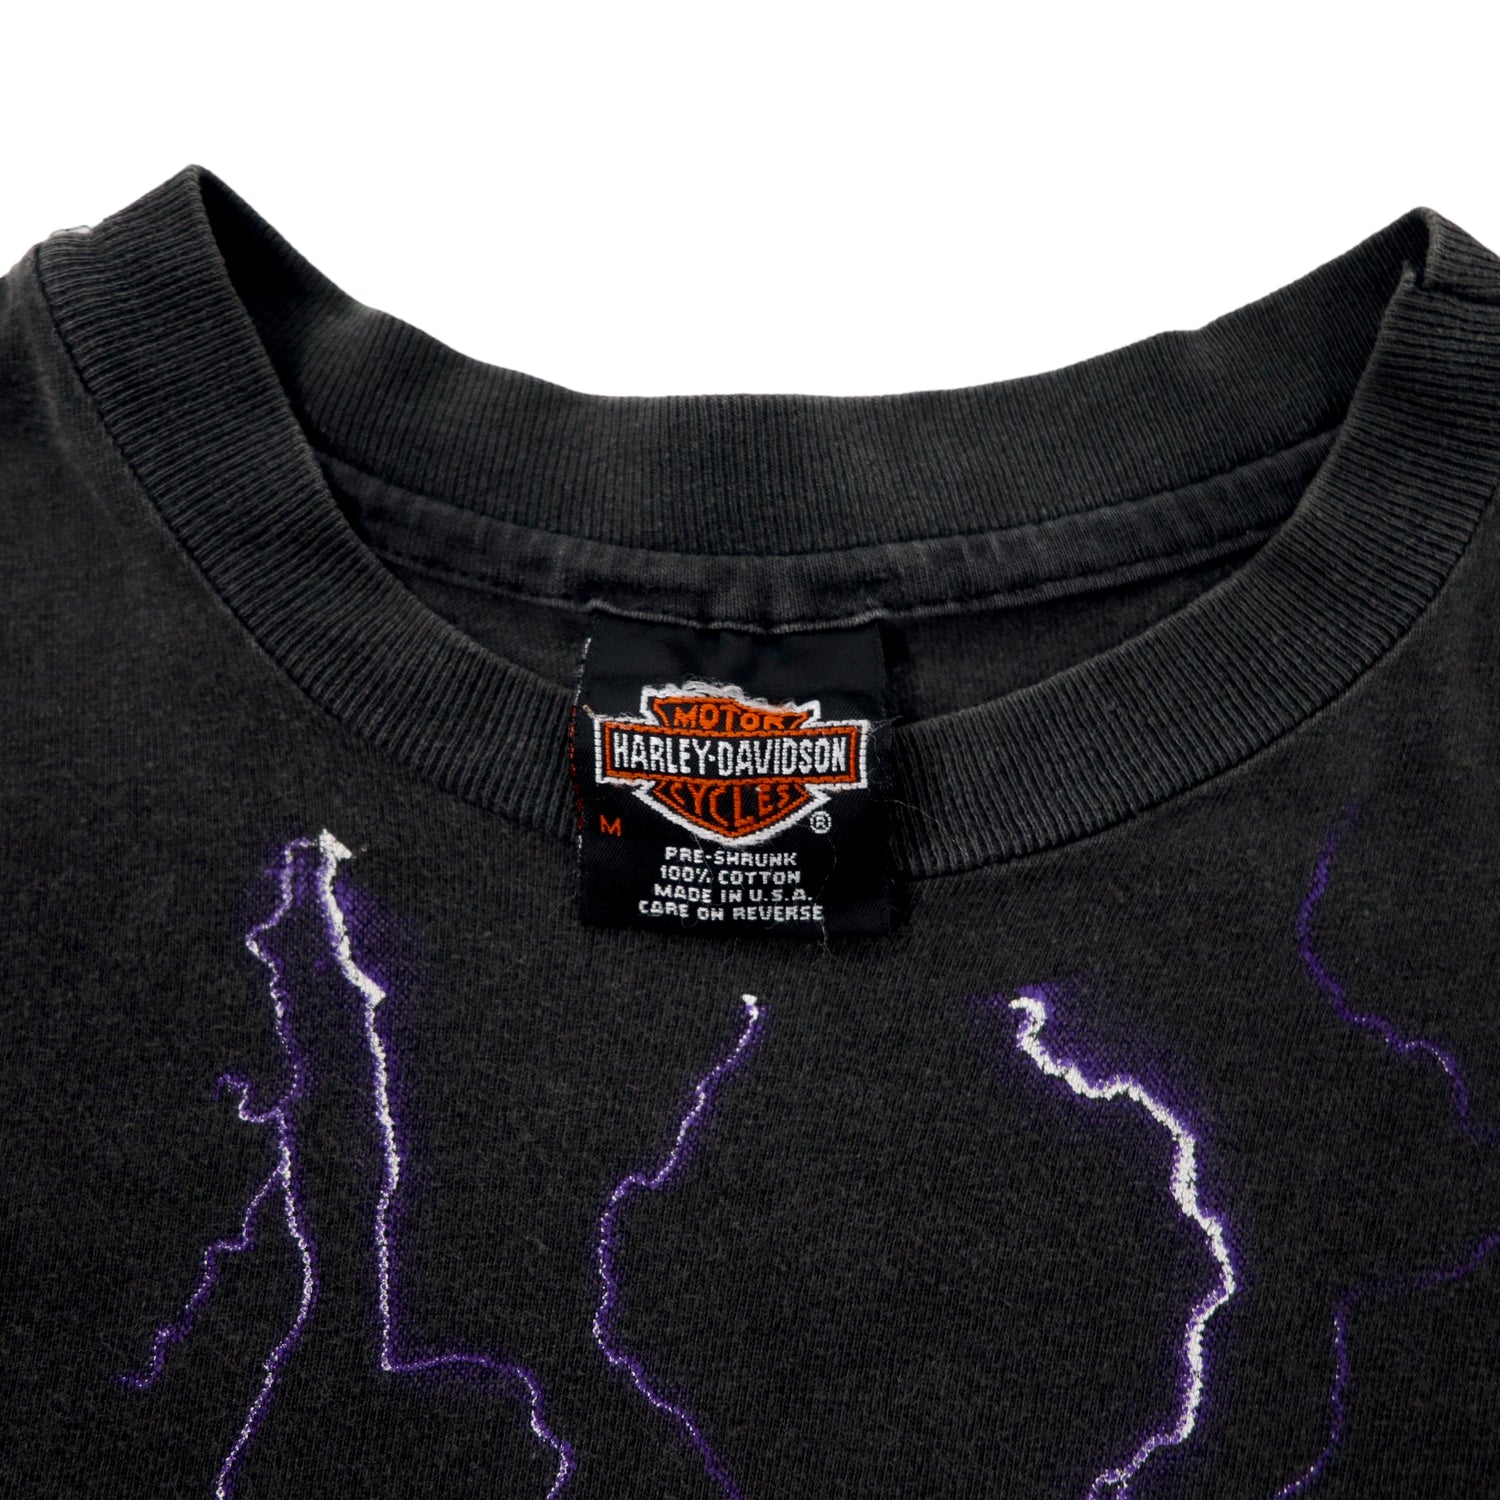 USA Made Harley Davidson 90s Overprint T-shirt M Black Patterned Thunder &  Lightning Cotton Hanes Beefy-T